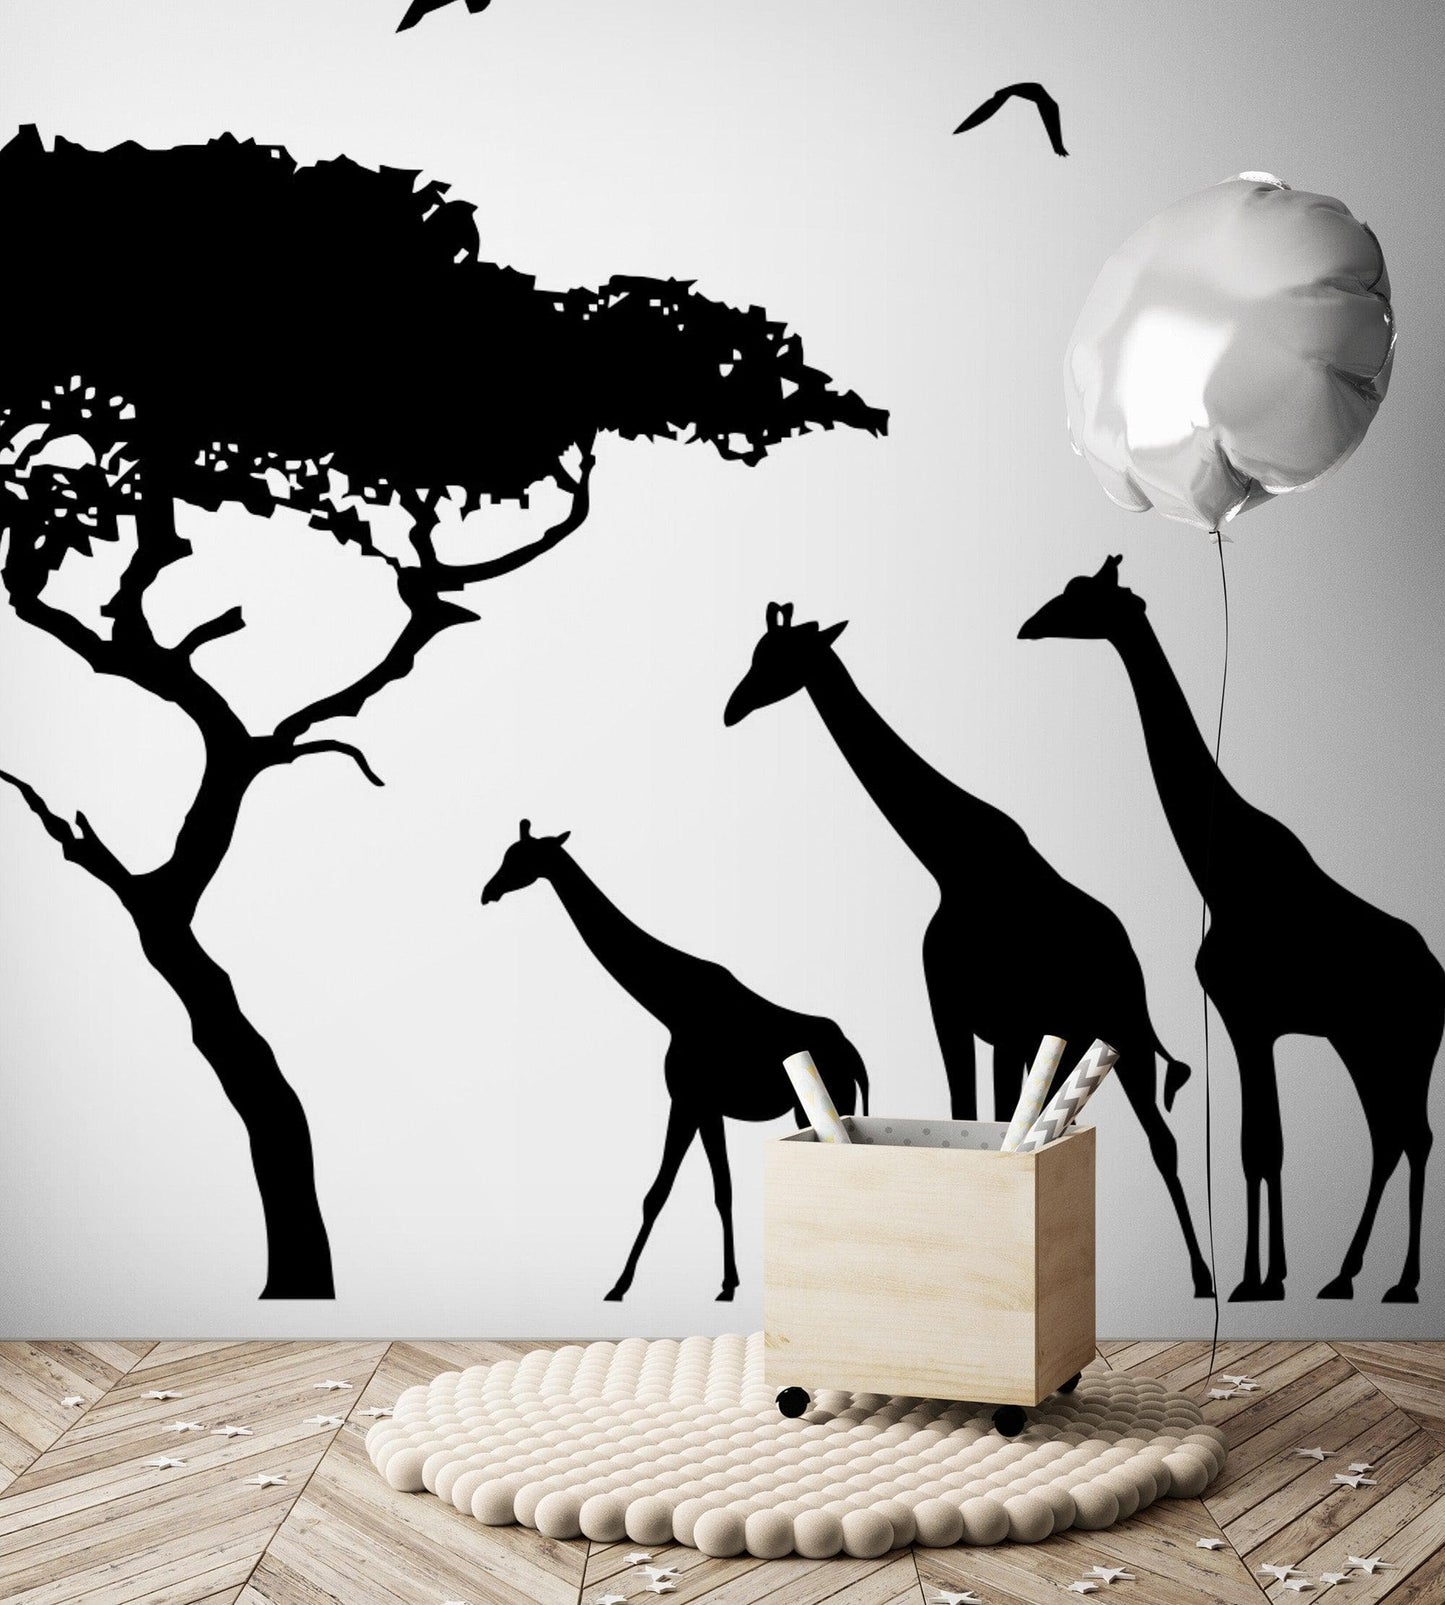 African Safari Theme Wall Decal Sticker. Giraffes, Tree and Birds Wall Decal. #OS_ES104